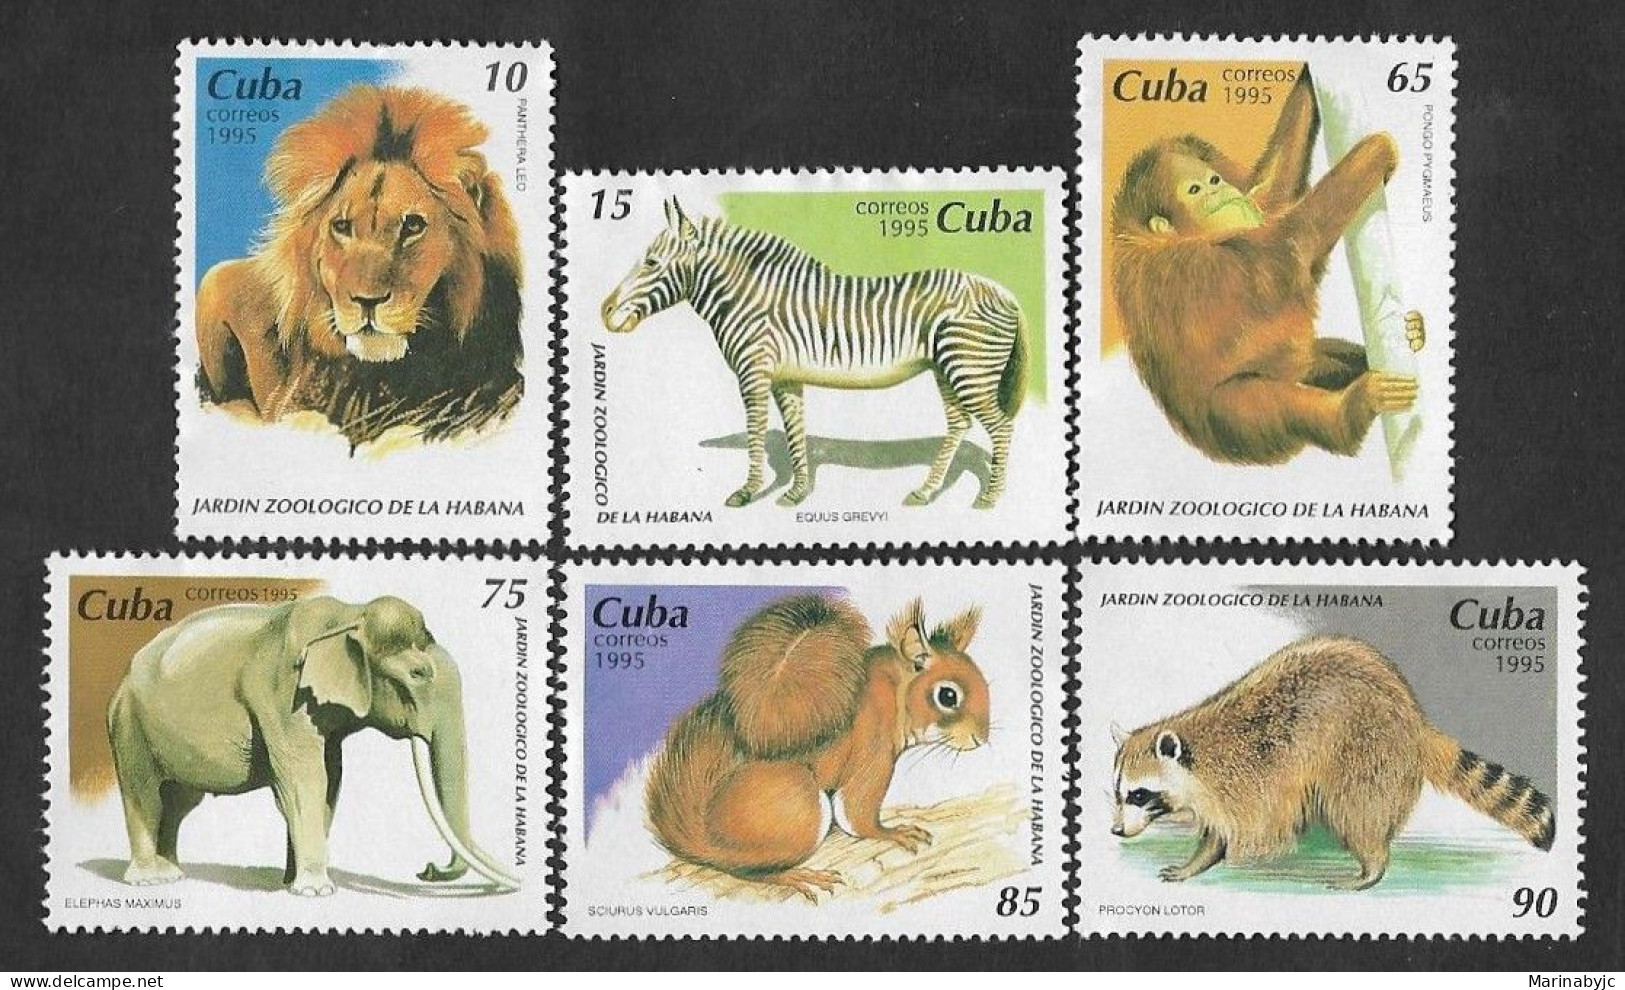 SE)1995 CUBA, ANIMALS OF THE HAVANA ZOOLOGICAL GARDEN, 6 STAMPS MNH - Ungebraucht